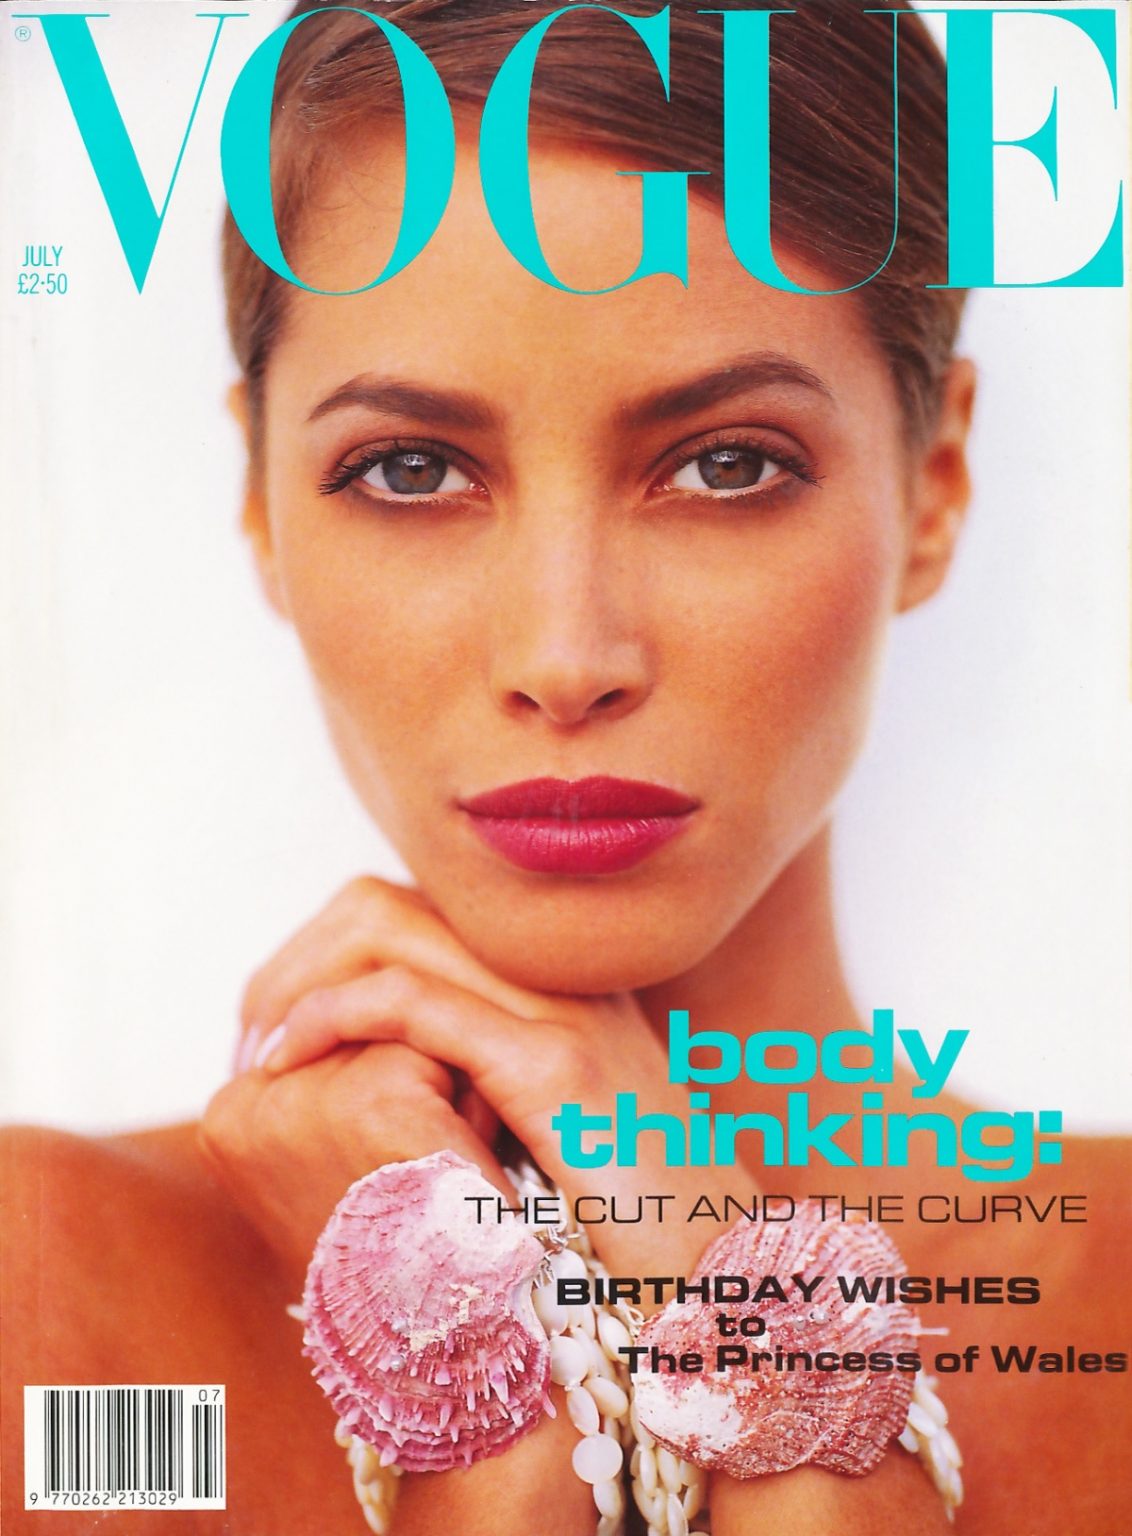 813. Christy Turlington - July, 1991 - 1159 British Vogue Covers ...